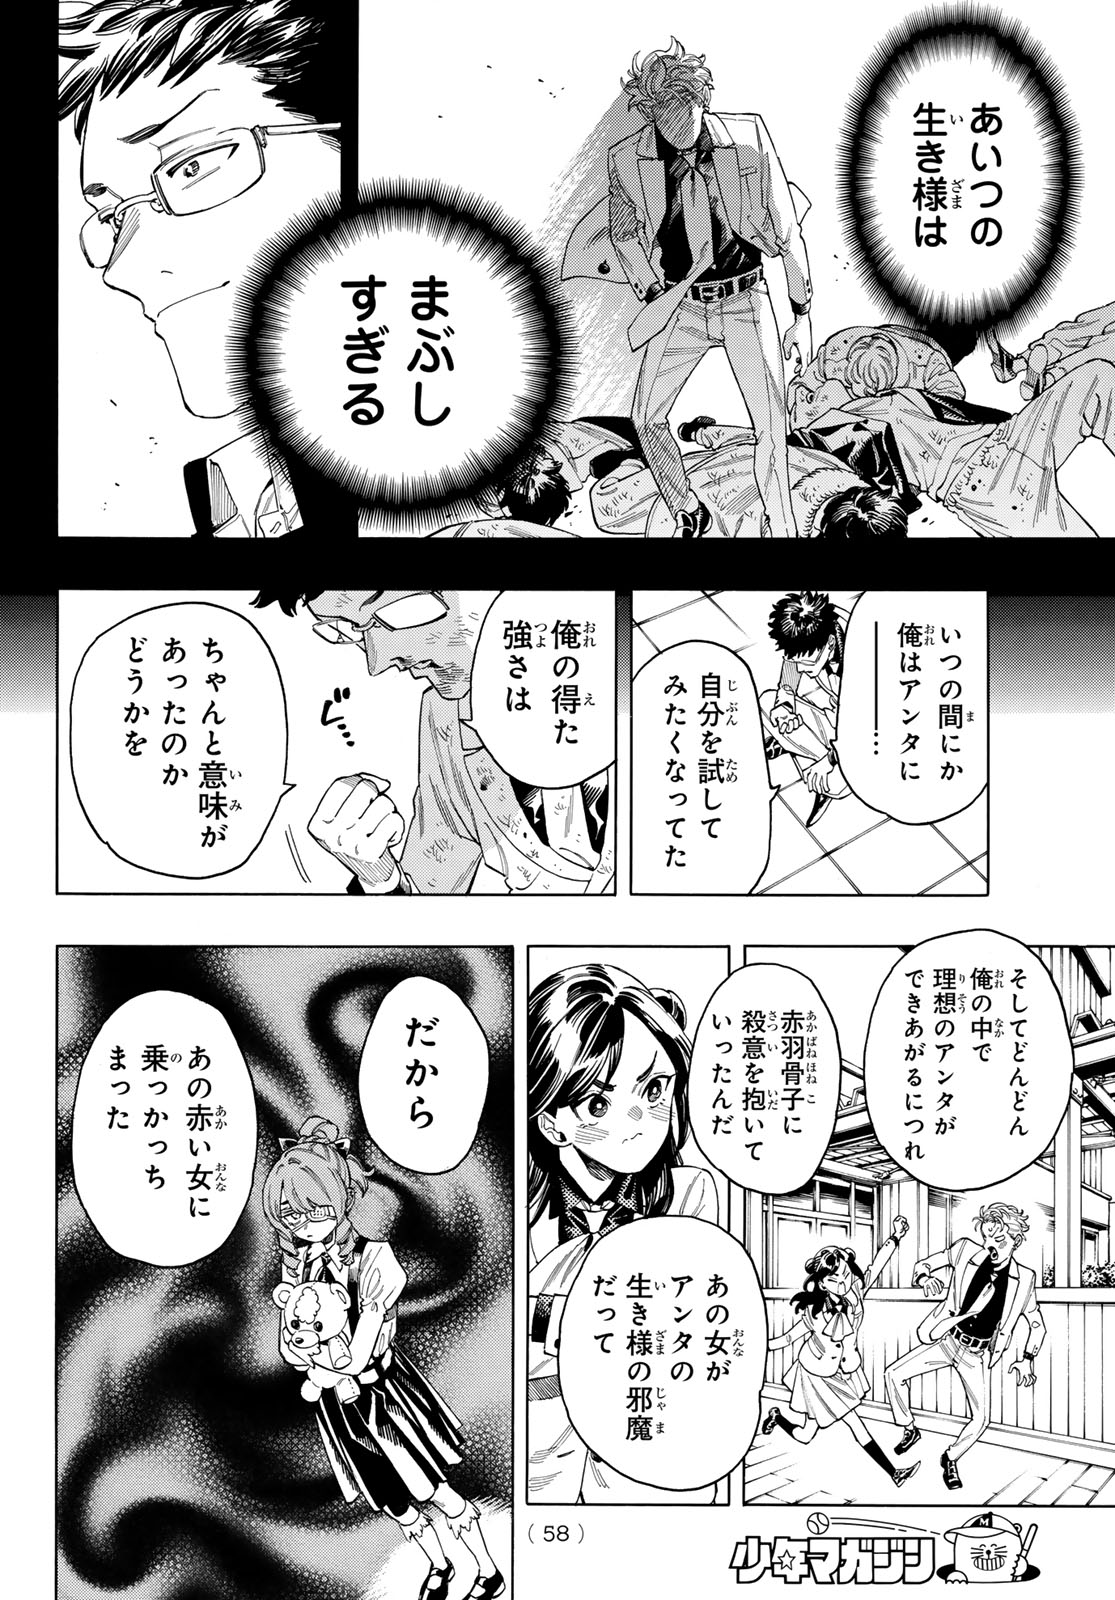 Akabane Honeko no Bodyguard - Chapter 79 - Page 12